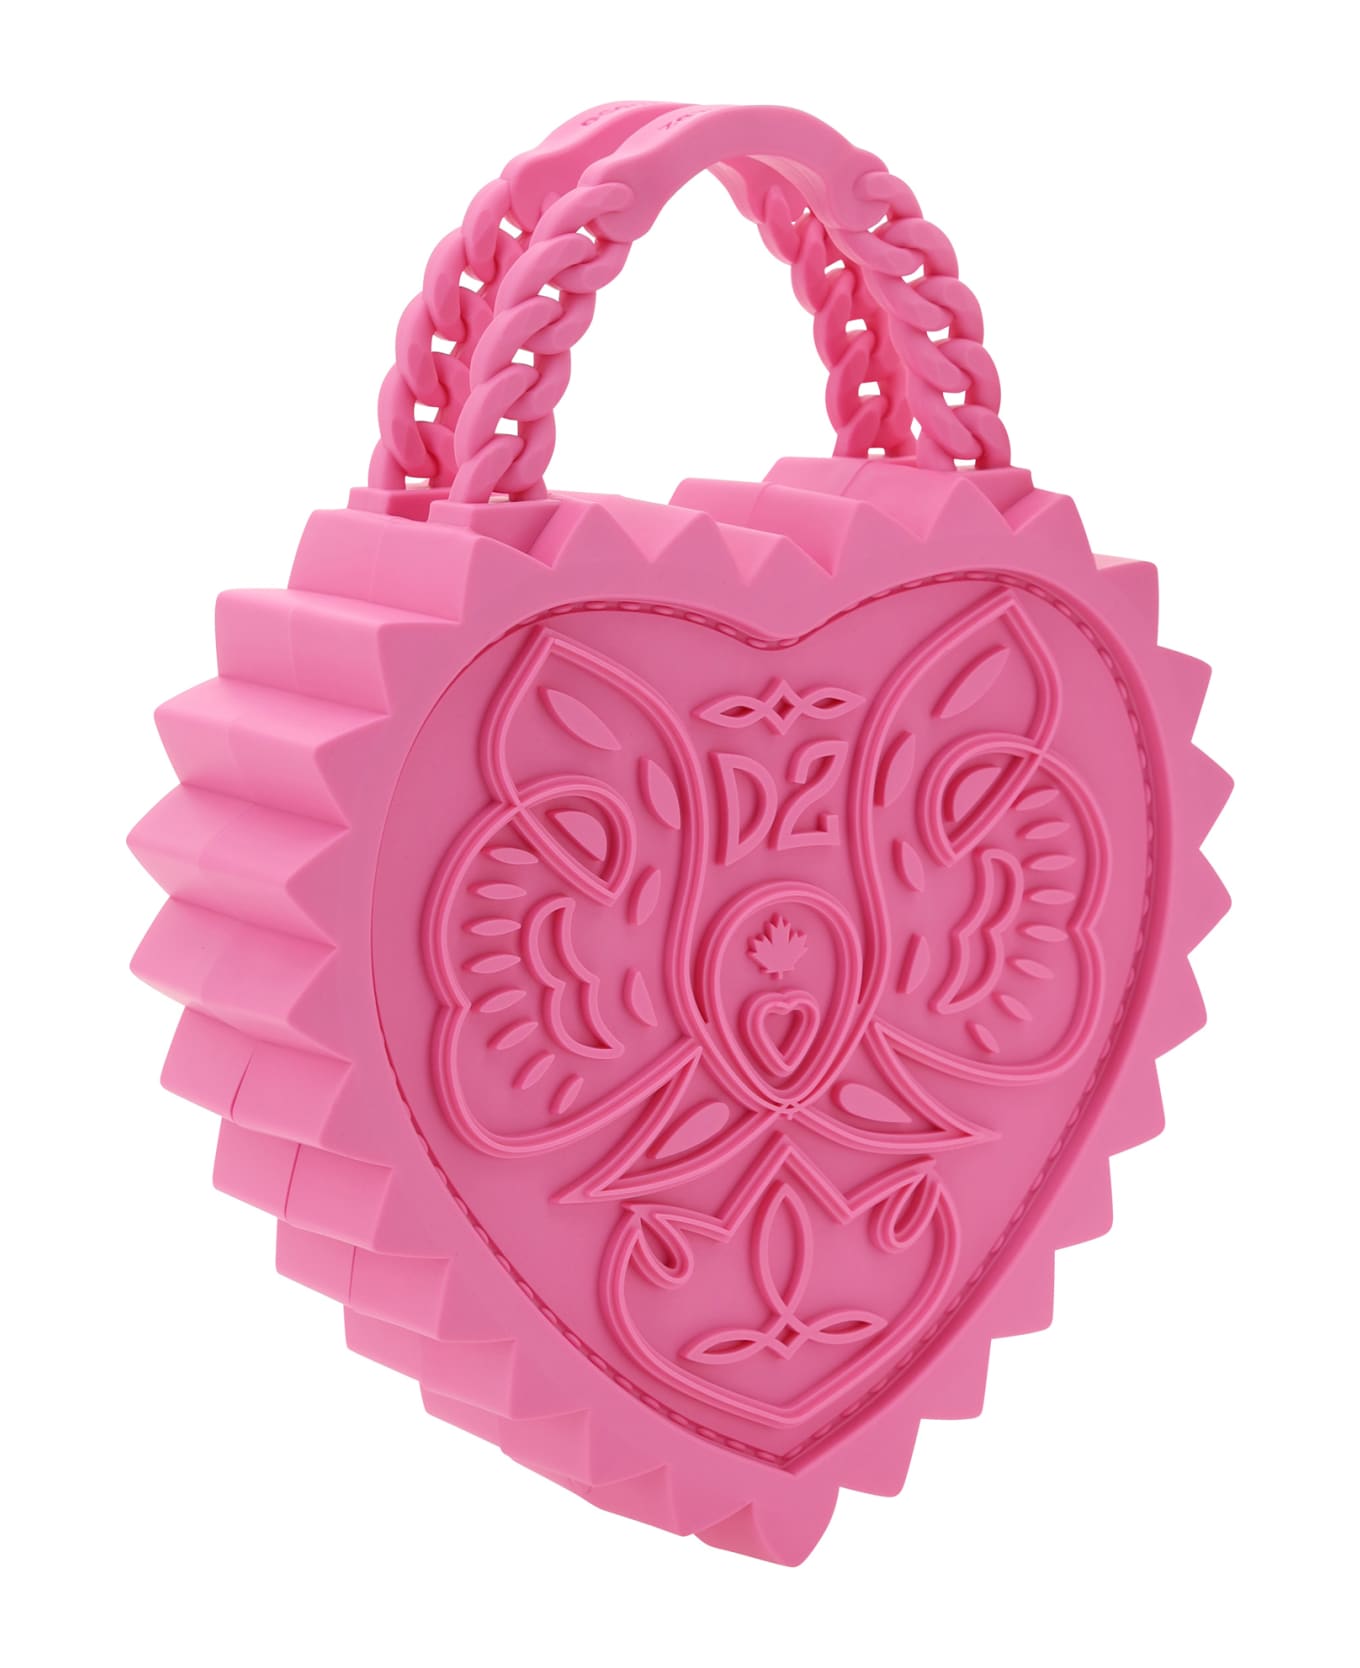 Dsquared2 Heart Handbag - Rosa